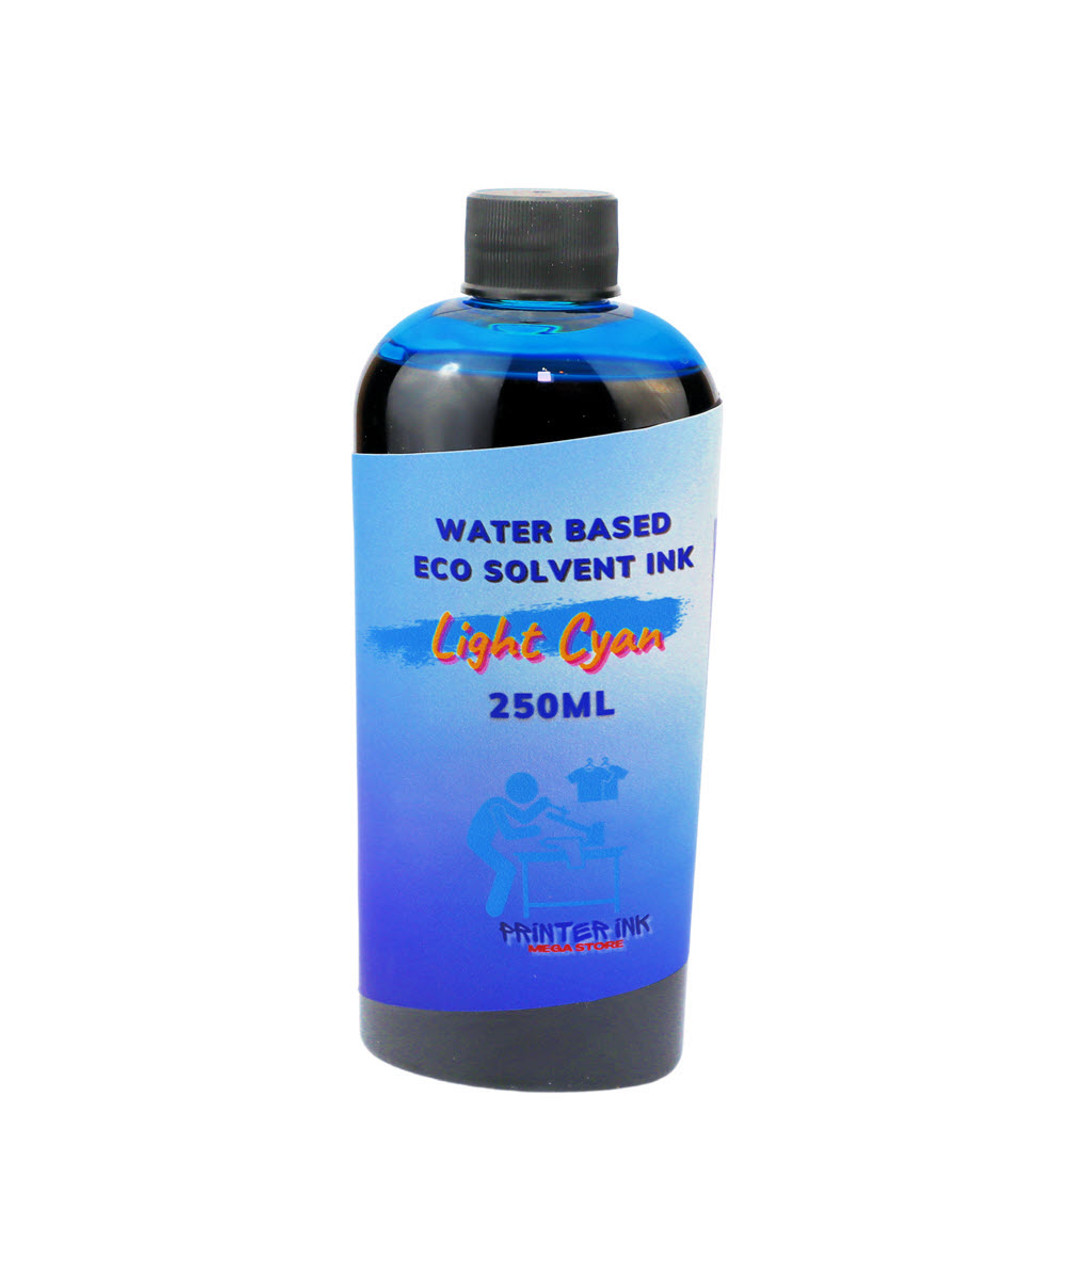 Light Cyan Water Based Eco Solvent Ink 250ml bottle for Epson Stylus Pro 7880 9880 Printer